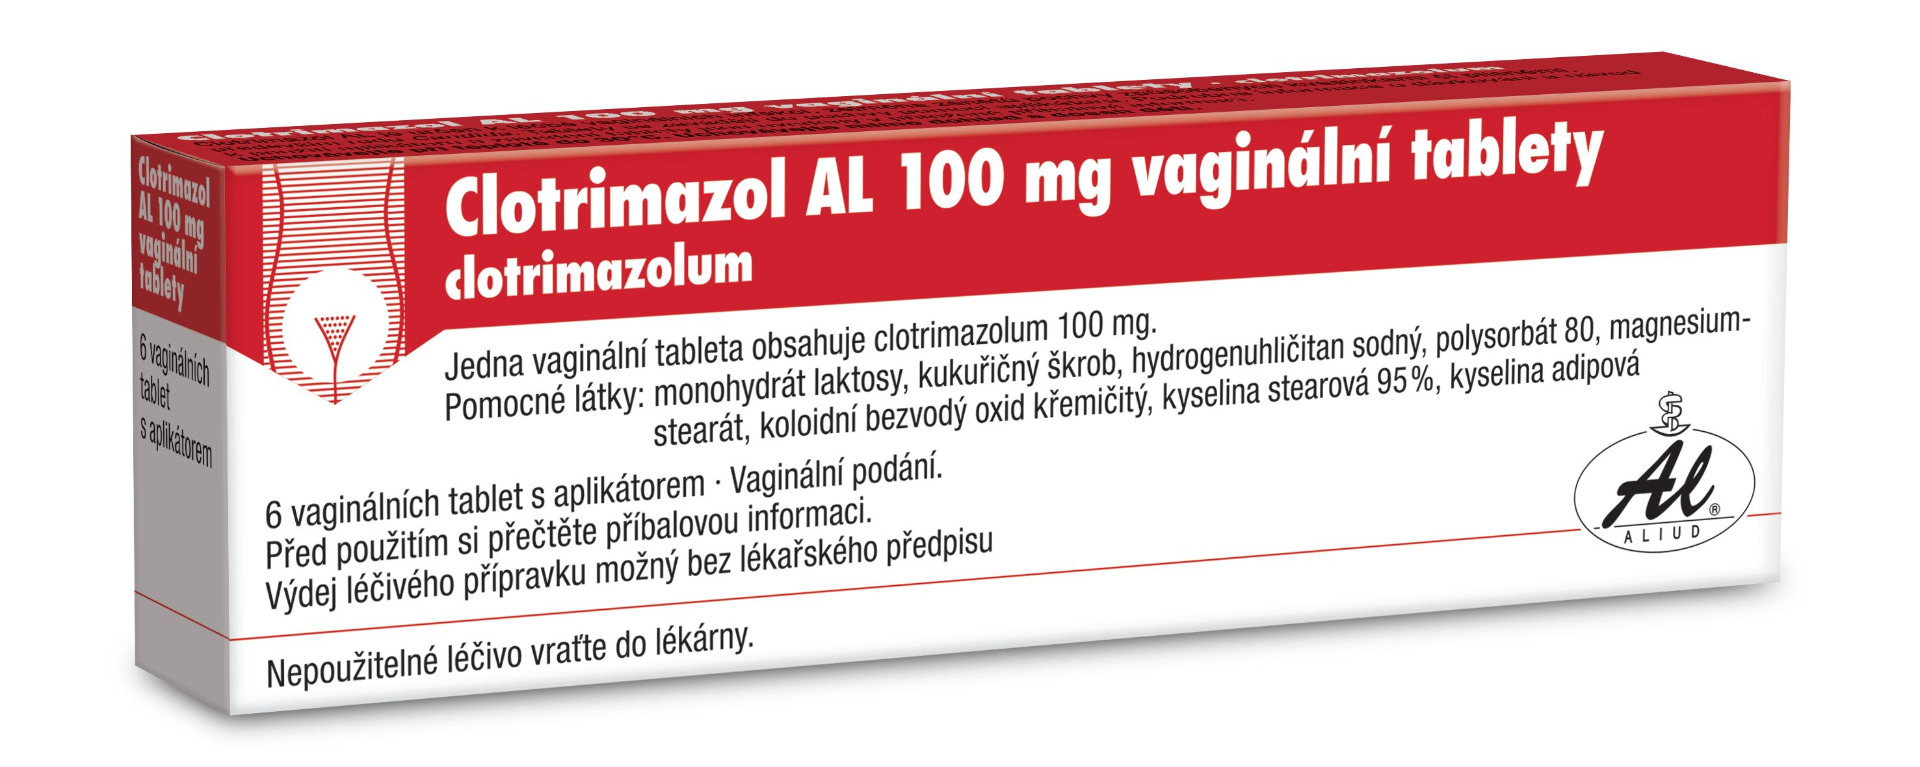 Clotrimazol AL 100 mg 6 vaginálních tablet + aplikátor Clotrimazol AL